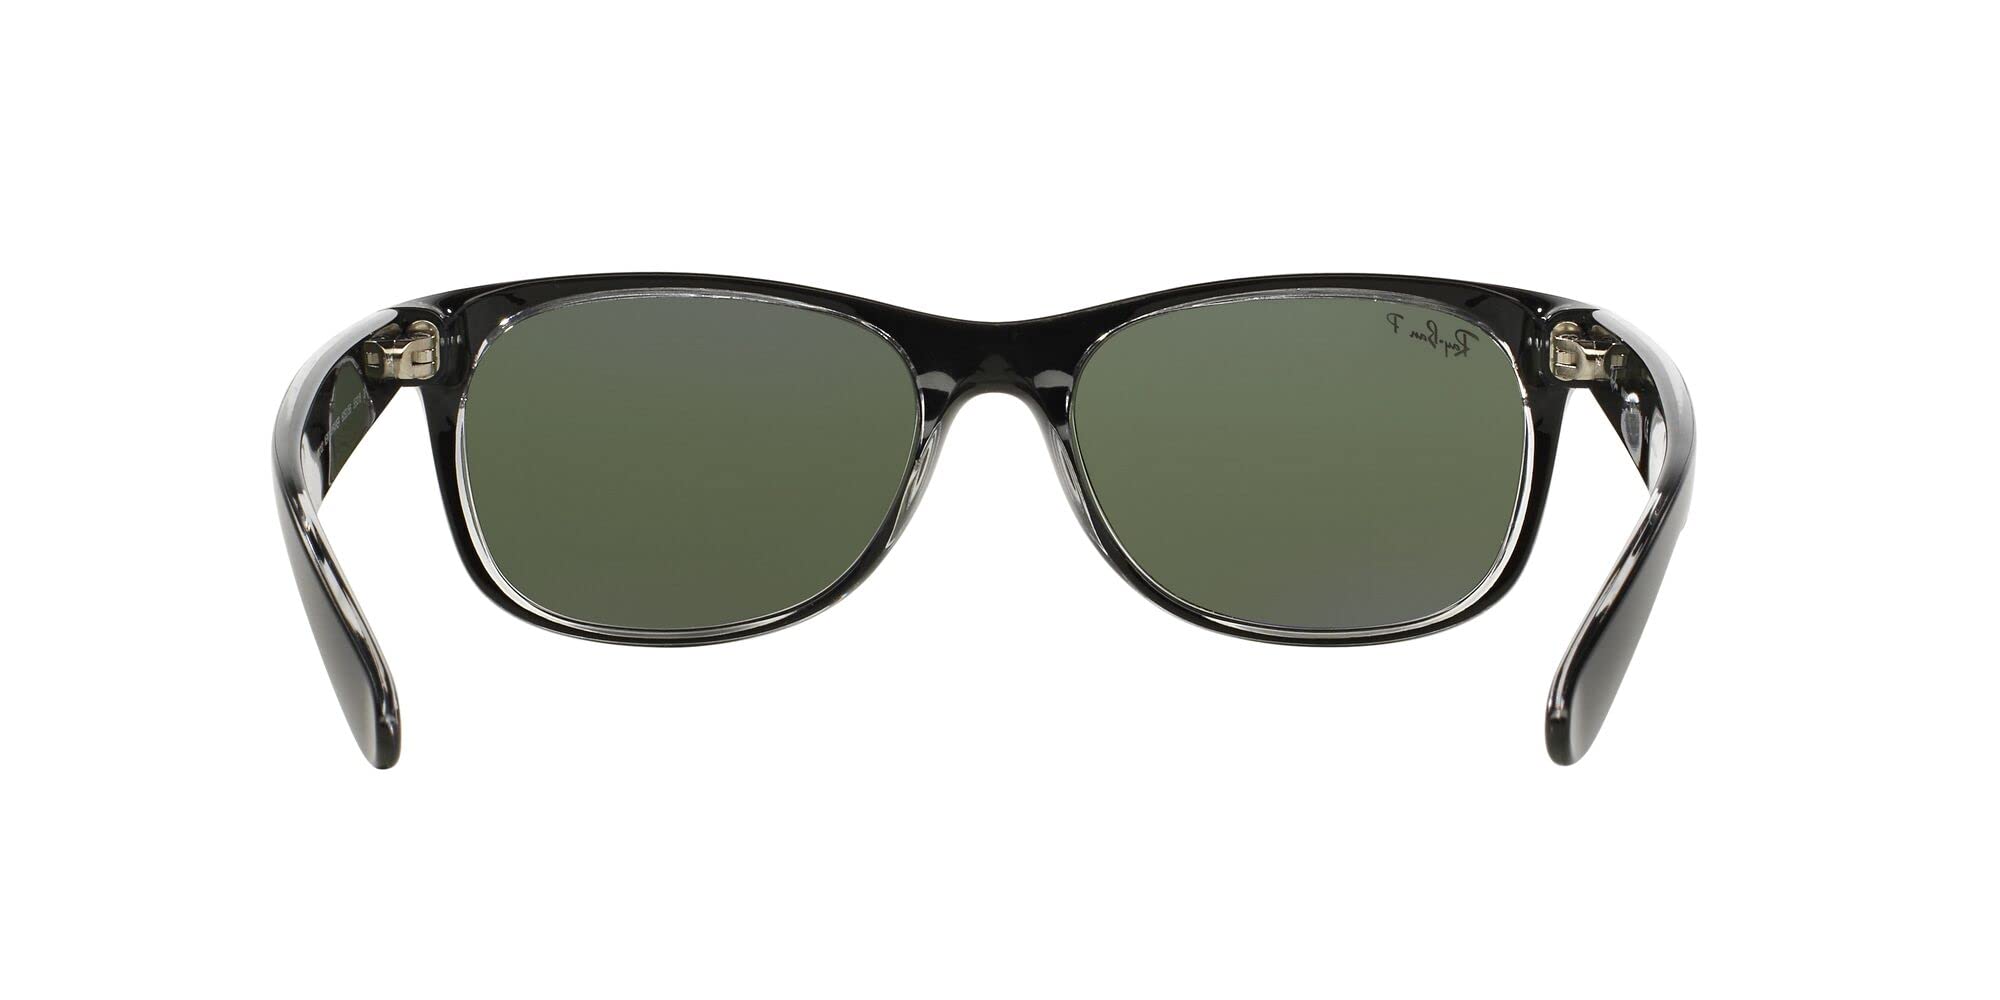 Ray-Ban Rb2132 New Wayfarer Polarized Square Sunglasses